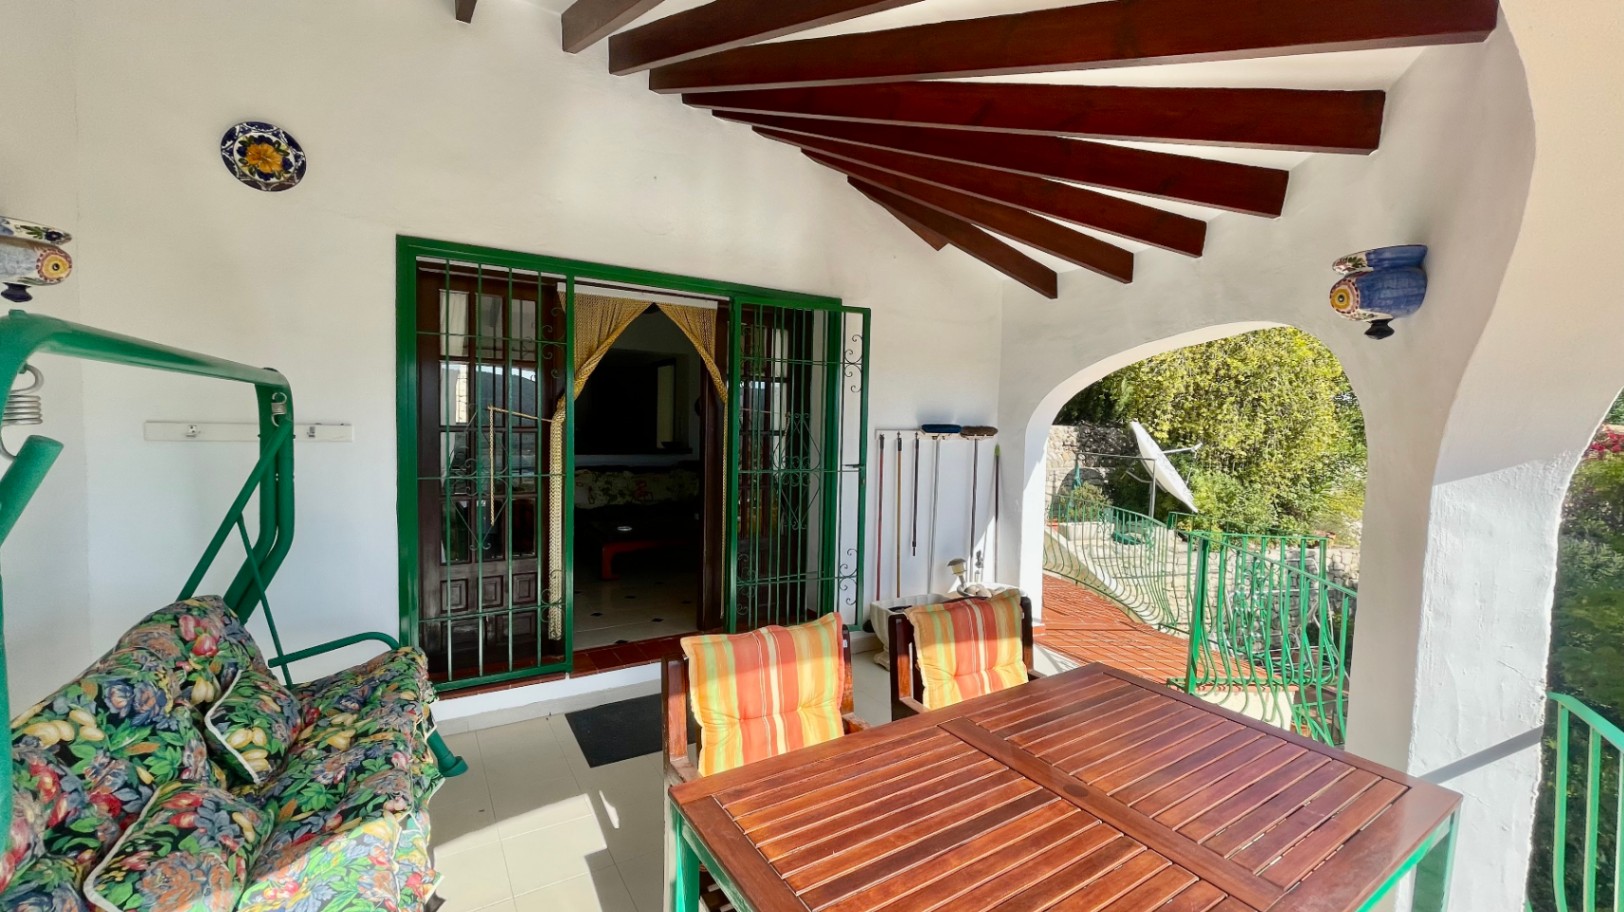 Villa for sale in Alcalali: Stunning views